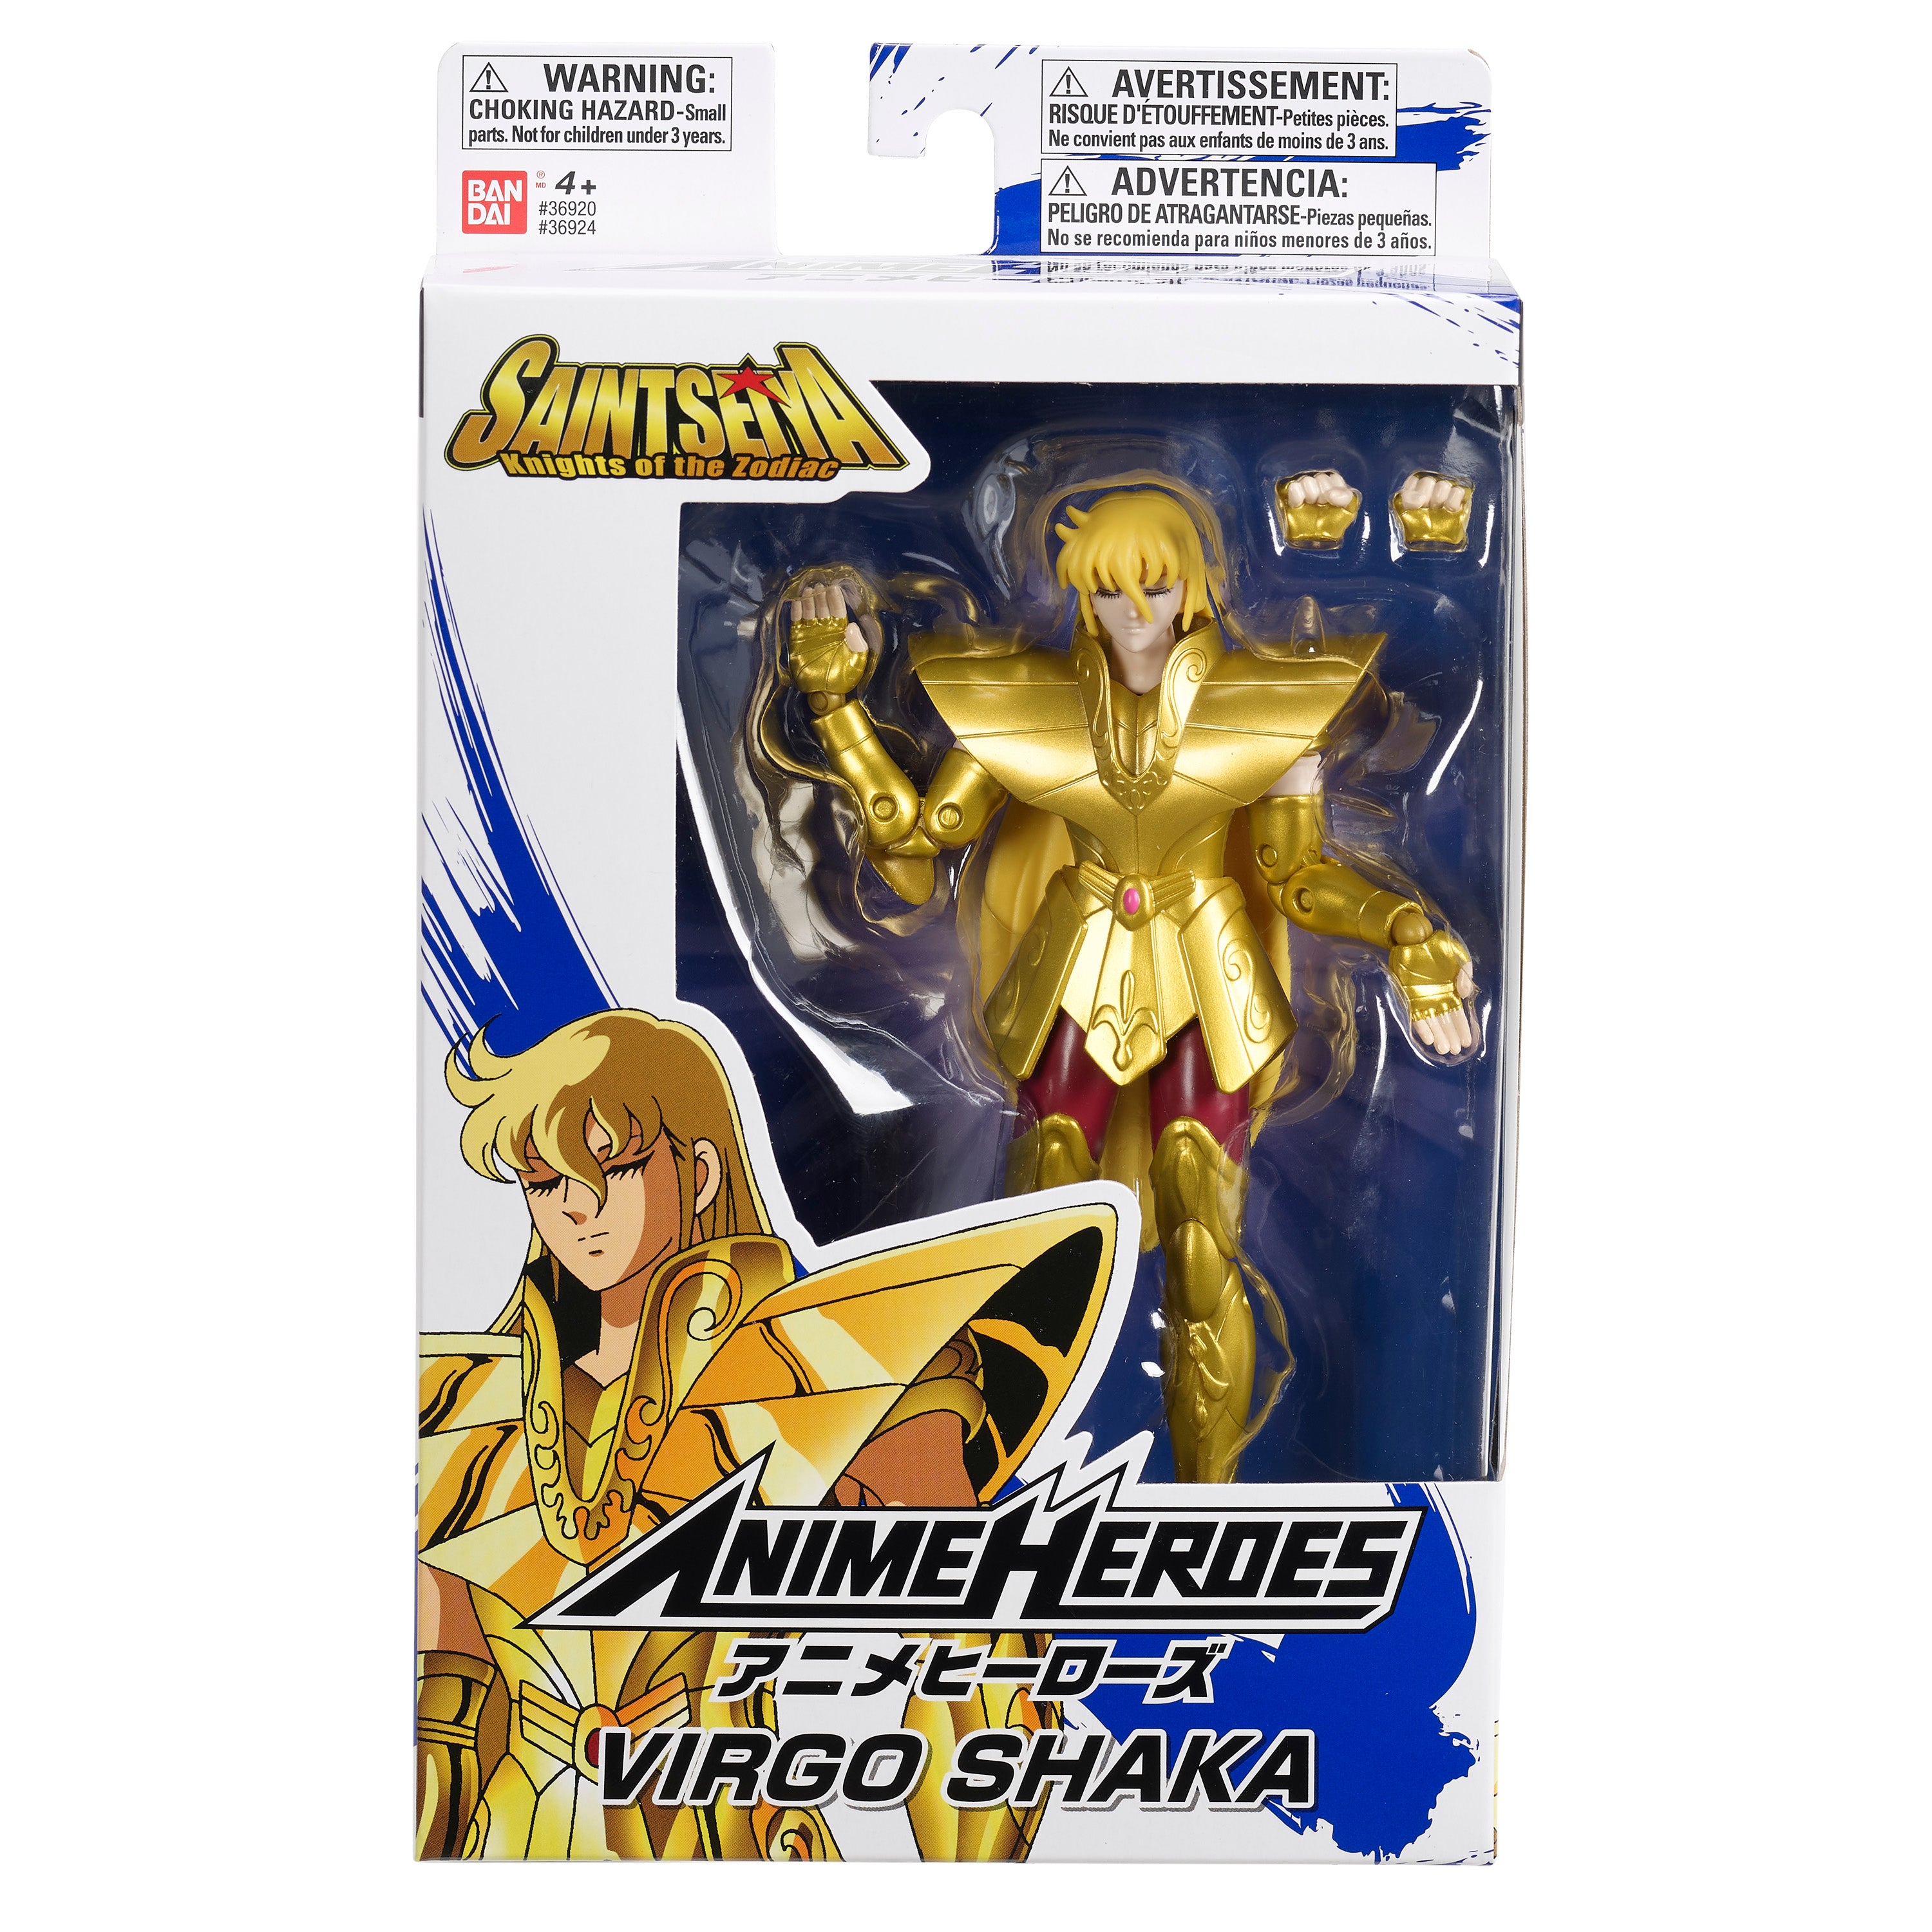 Anime Heroes Saint Seiya Knights of the Zodiac Virgo Shaka 6.5